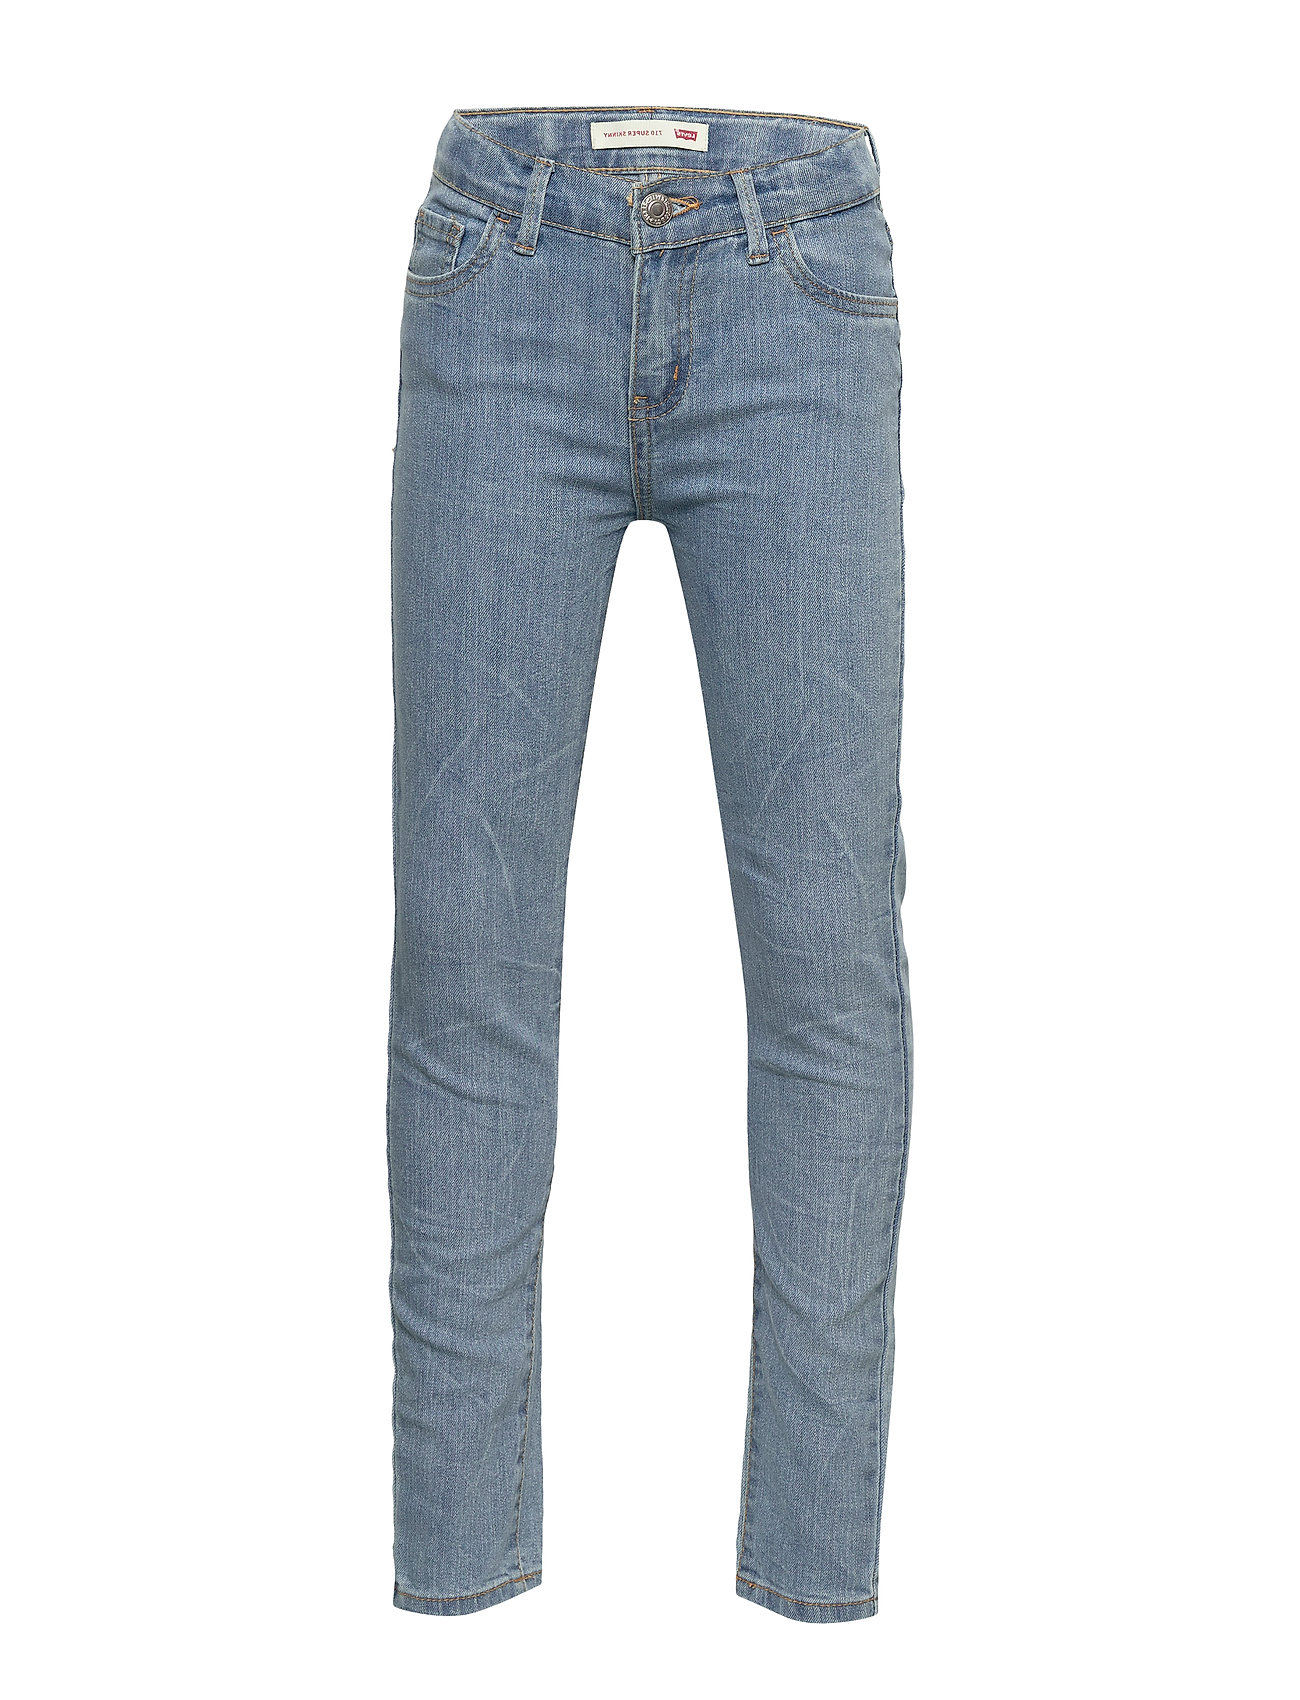 levis 710 super skinny jeans